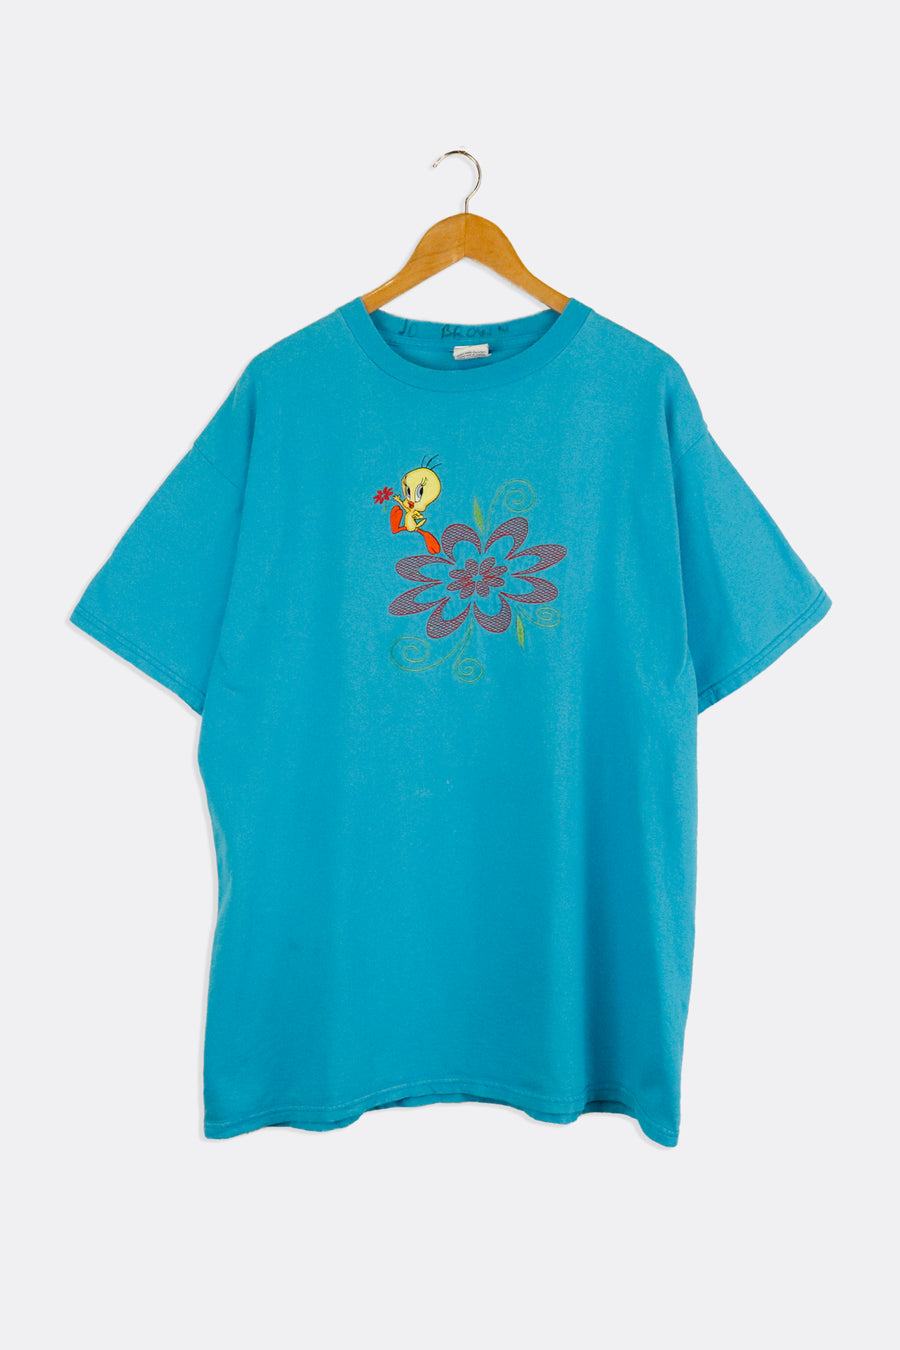 Vintage 1998 Looneytunes Tweety Bird By A Flower Embroidered T Shirt